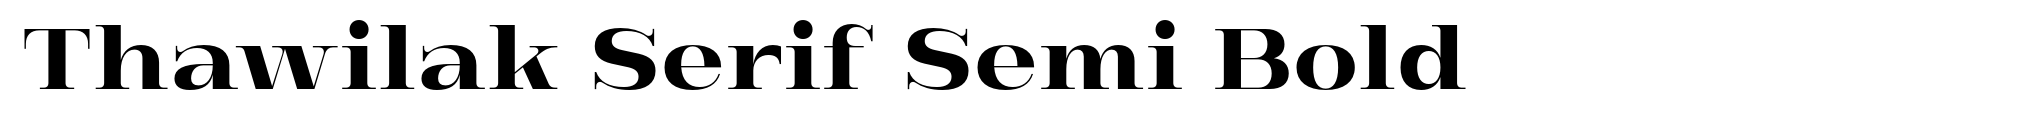 Thawilak Serif Semi Bold image